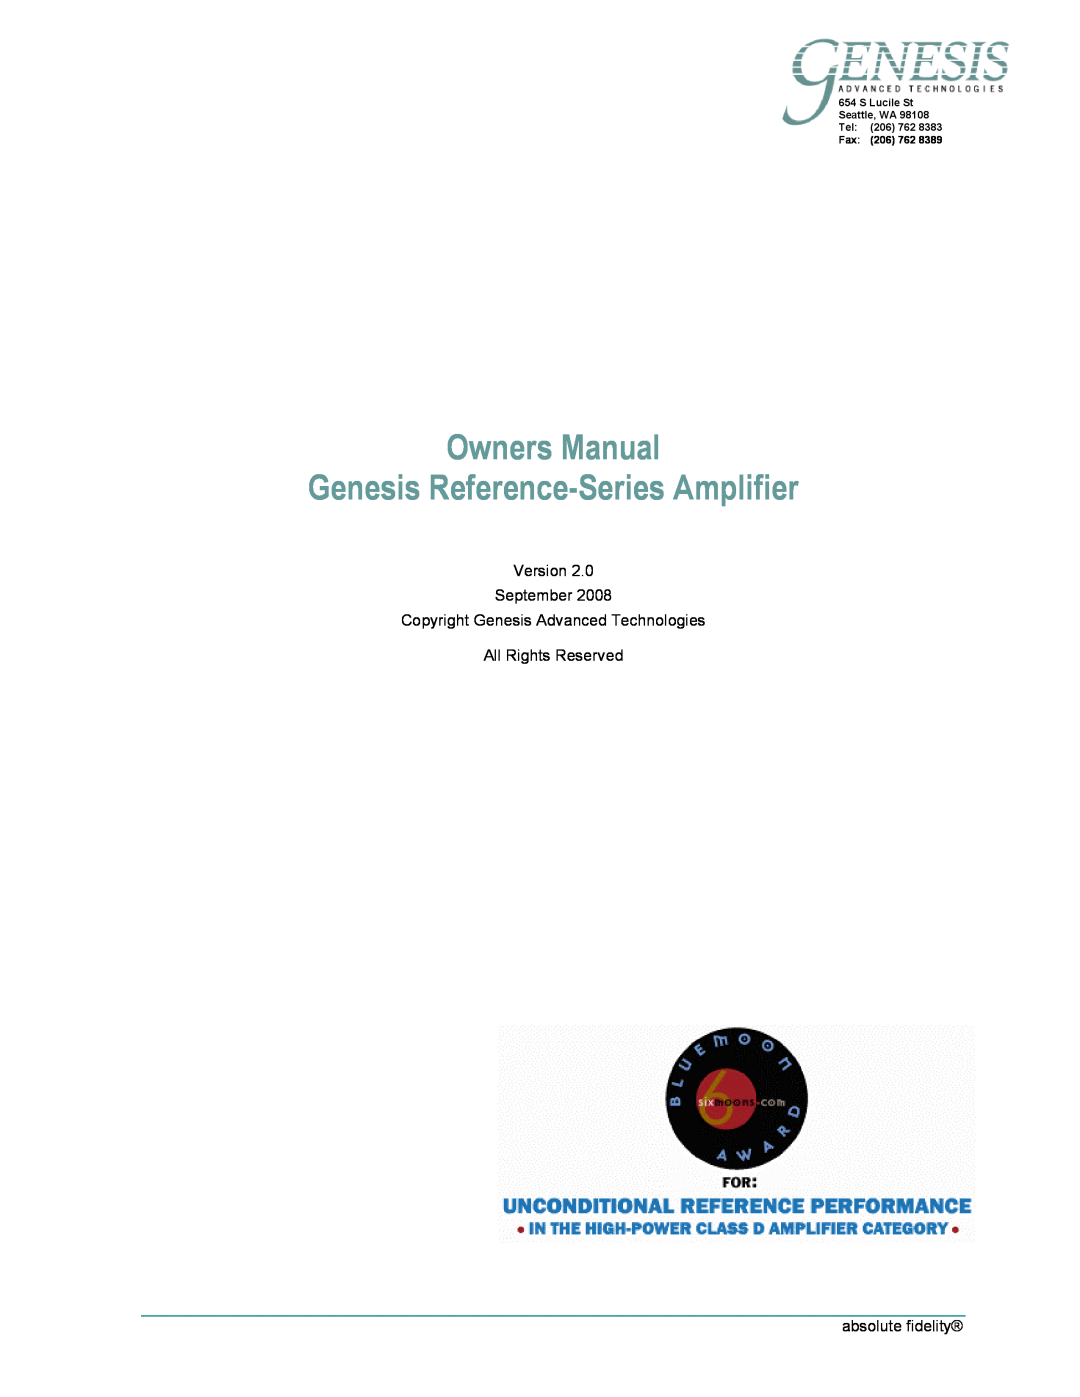 Genesis Advanced Technologies None owner manual Owners Manual Genesis Reference-SeriesAmplifier, Version September 